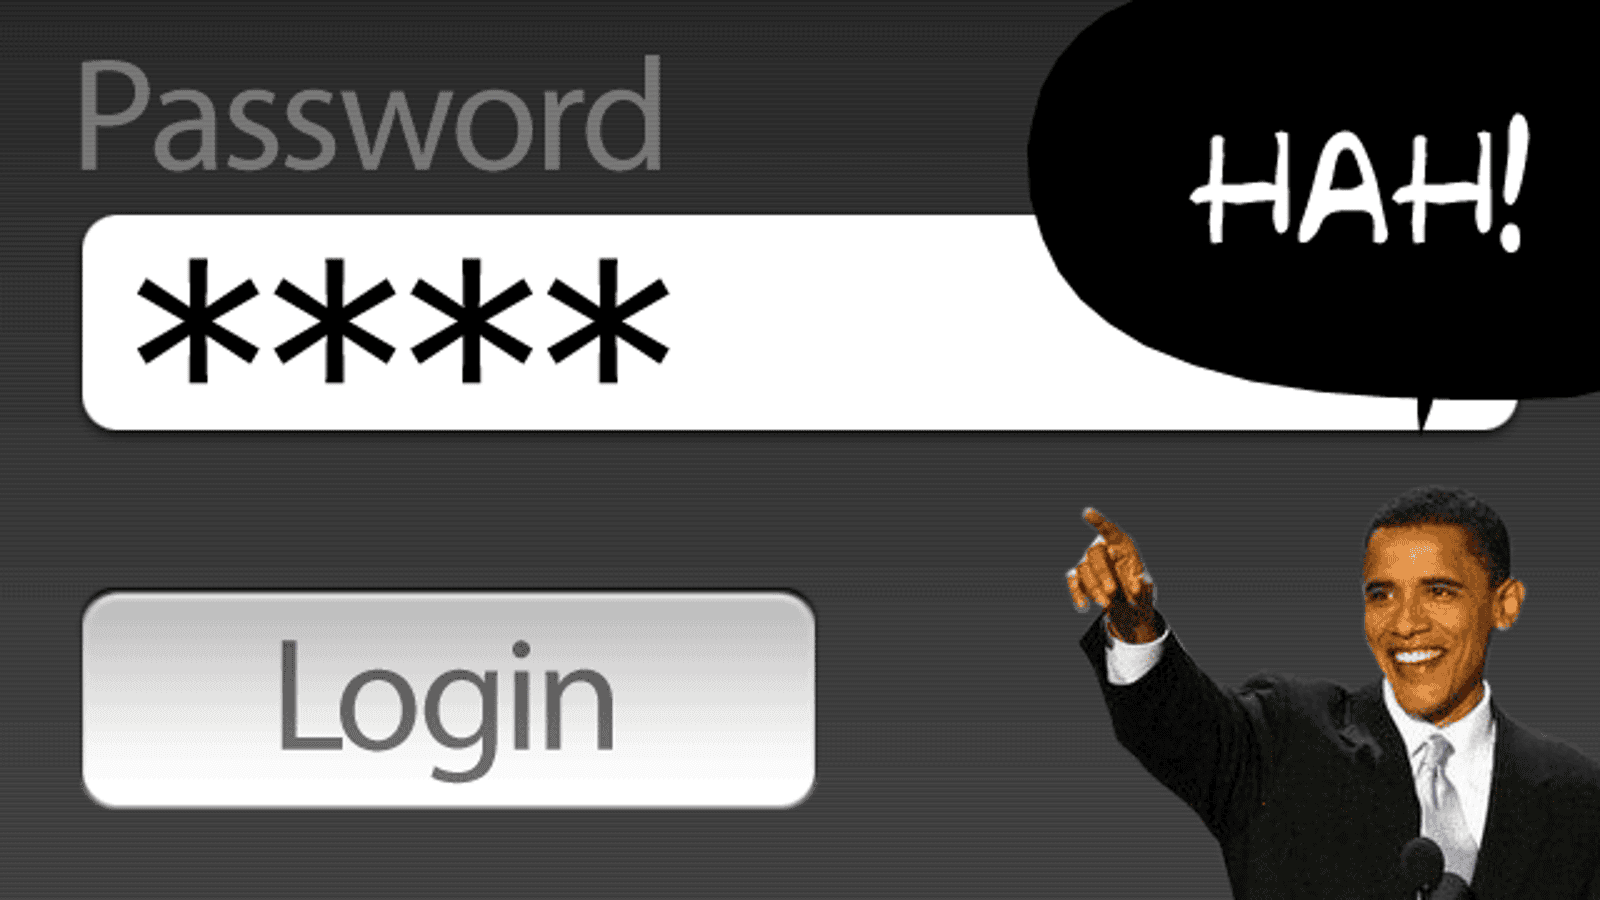 1password sucks